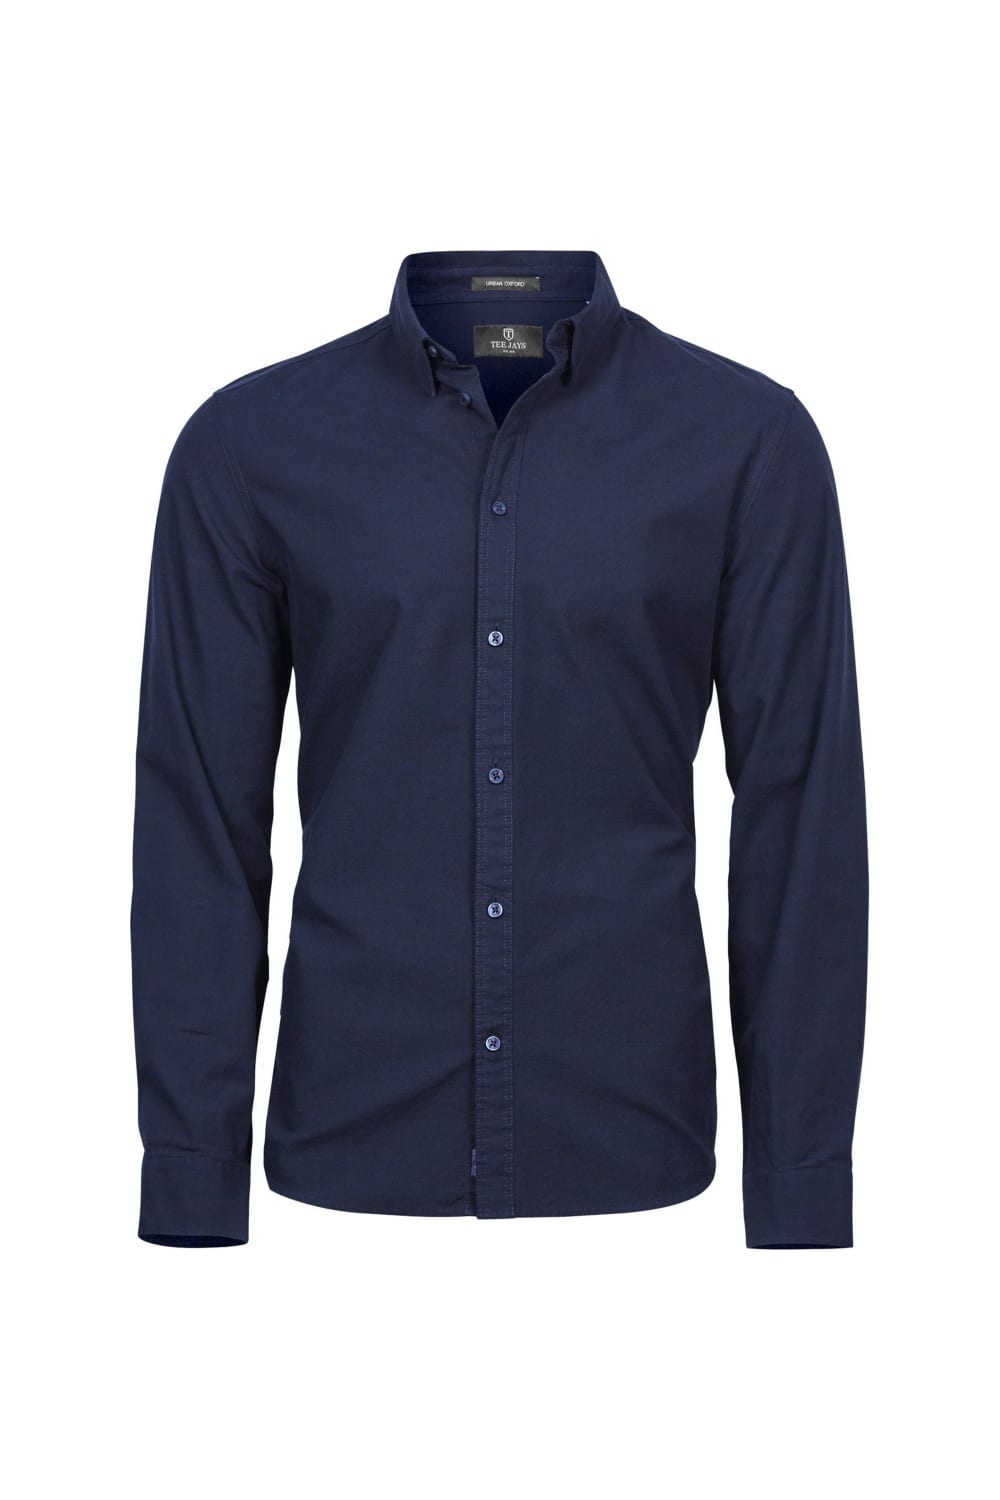 Tee Jays Mens Urban Long Sleeve Oxford Shirt (Navy)